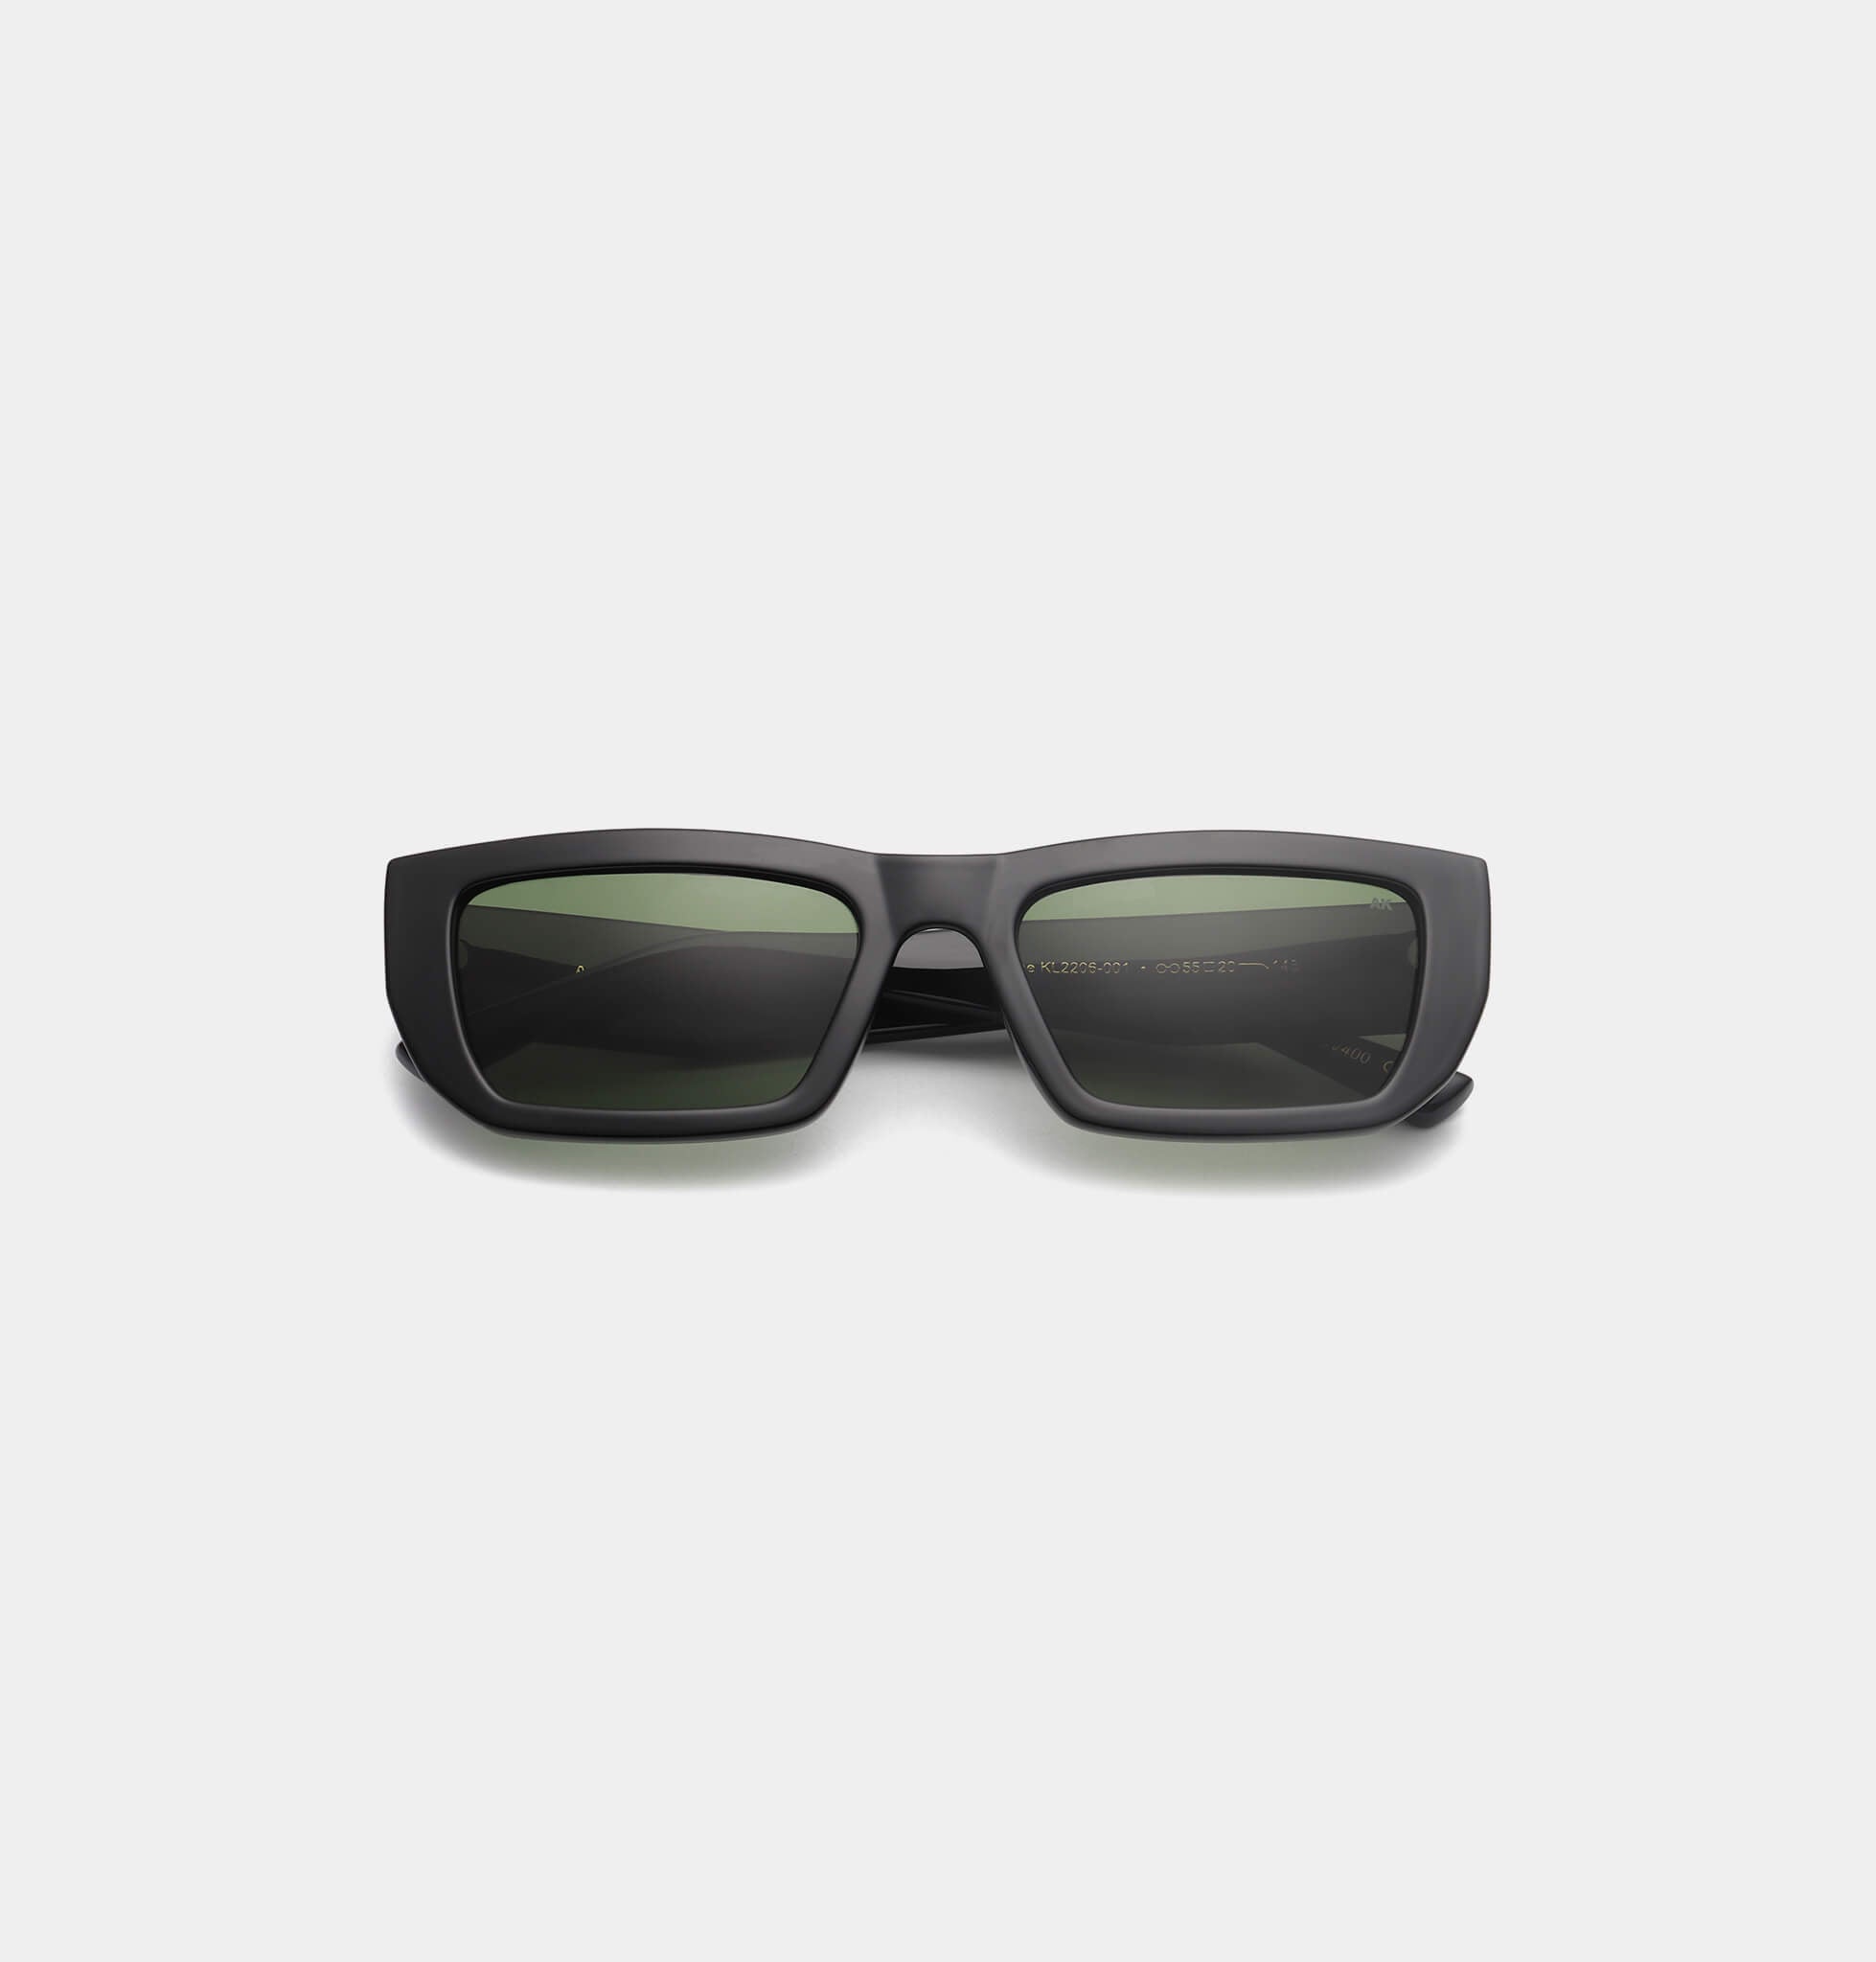 fame sunglasses - black